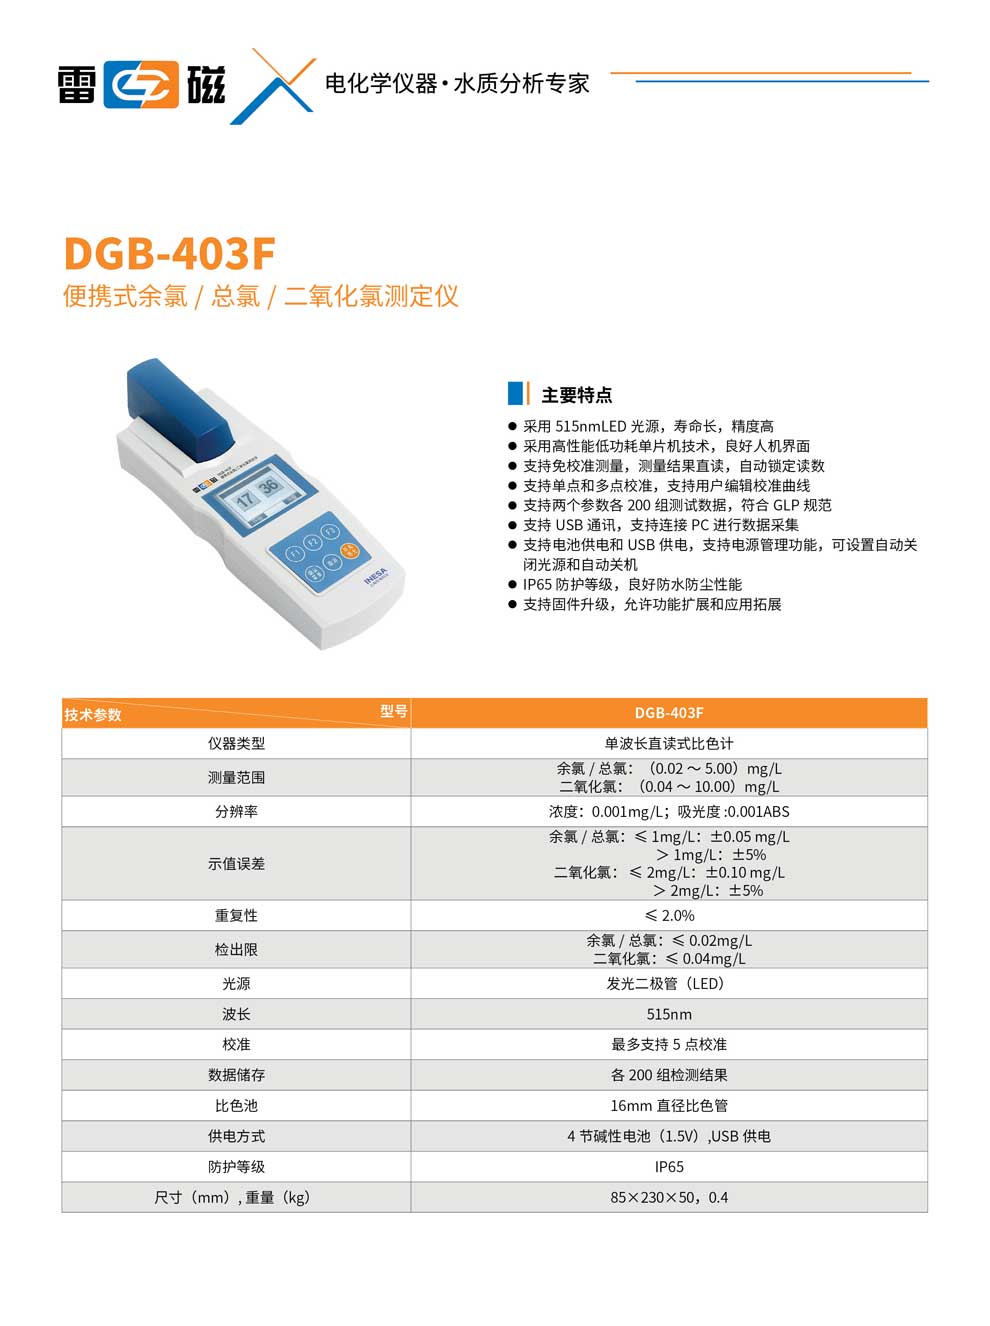 DGB-403F-彩页.jpg